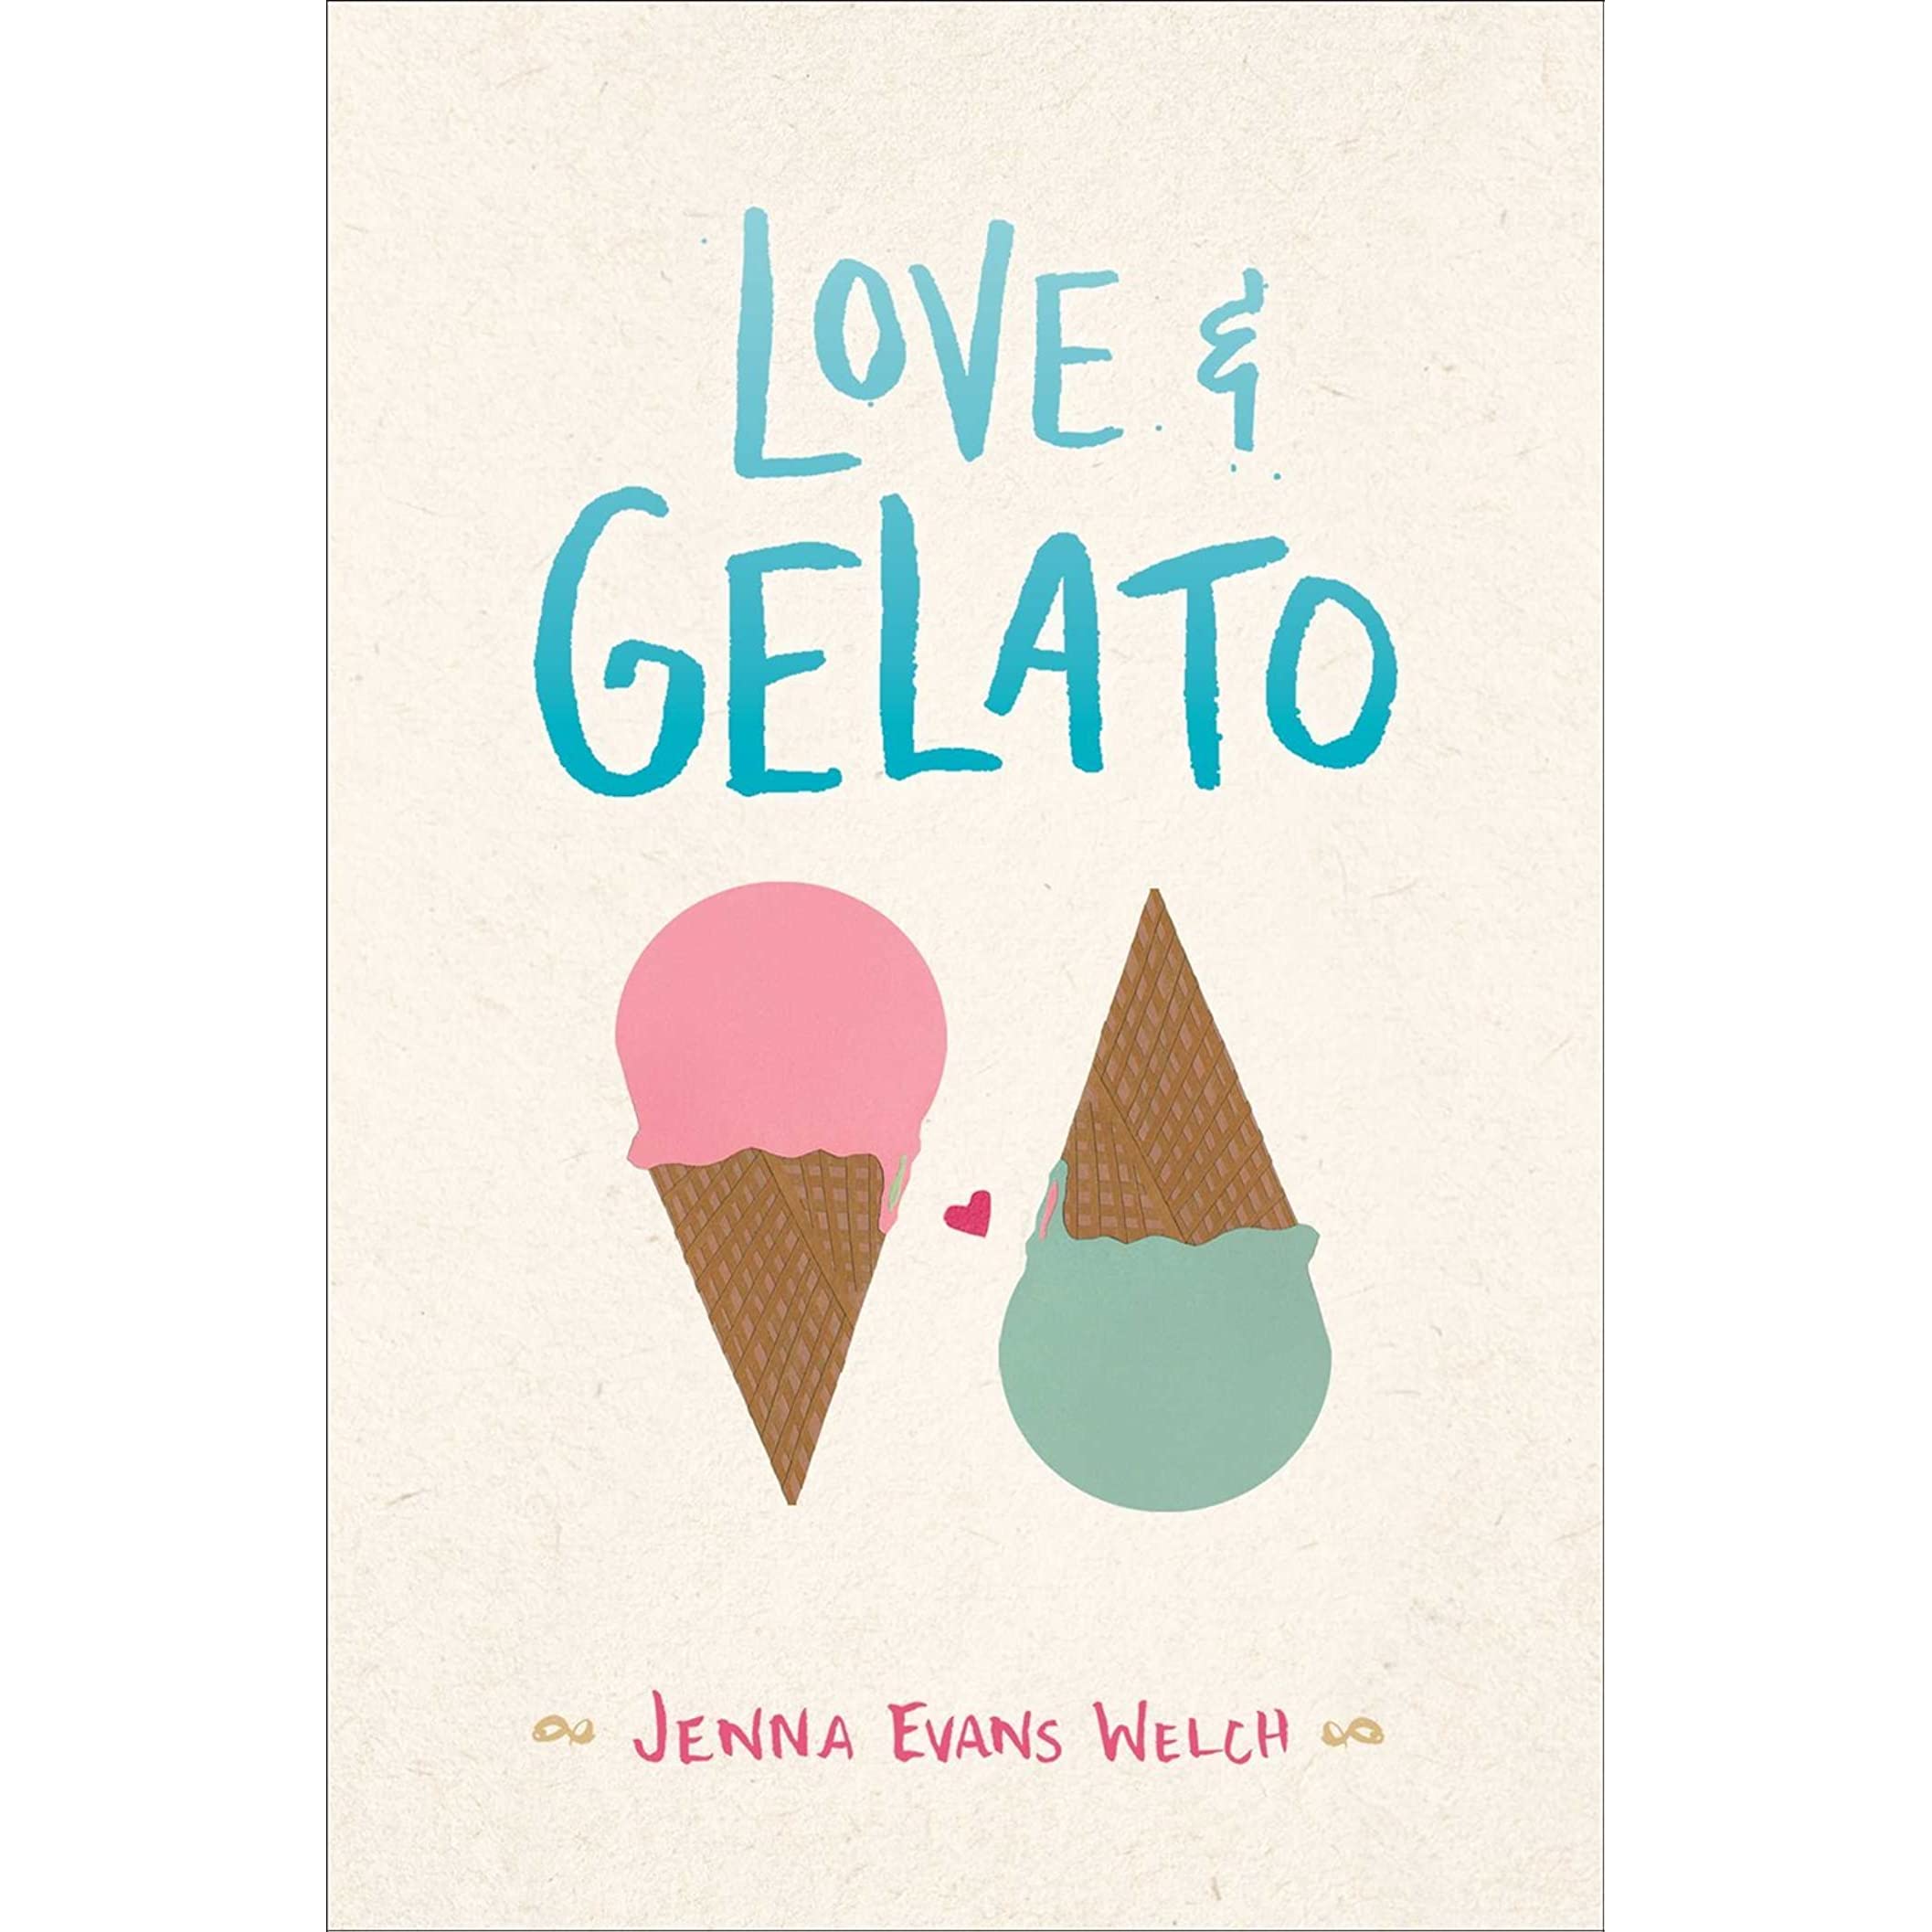 Image for "Love & Gelato"